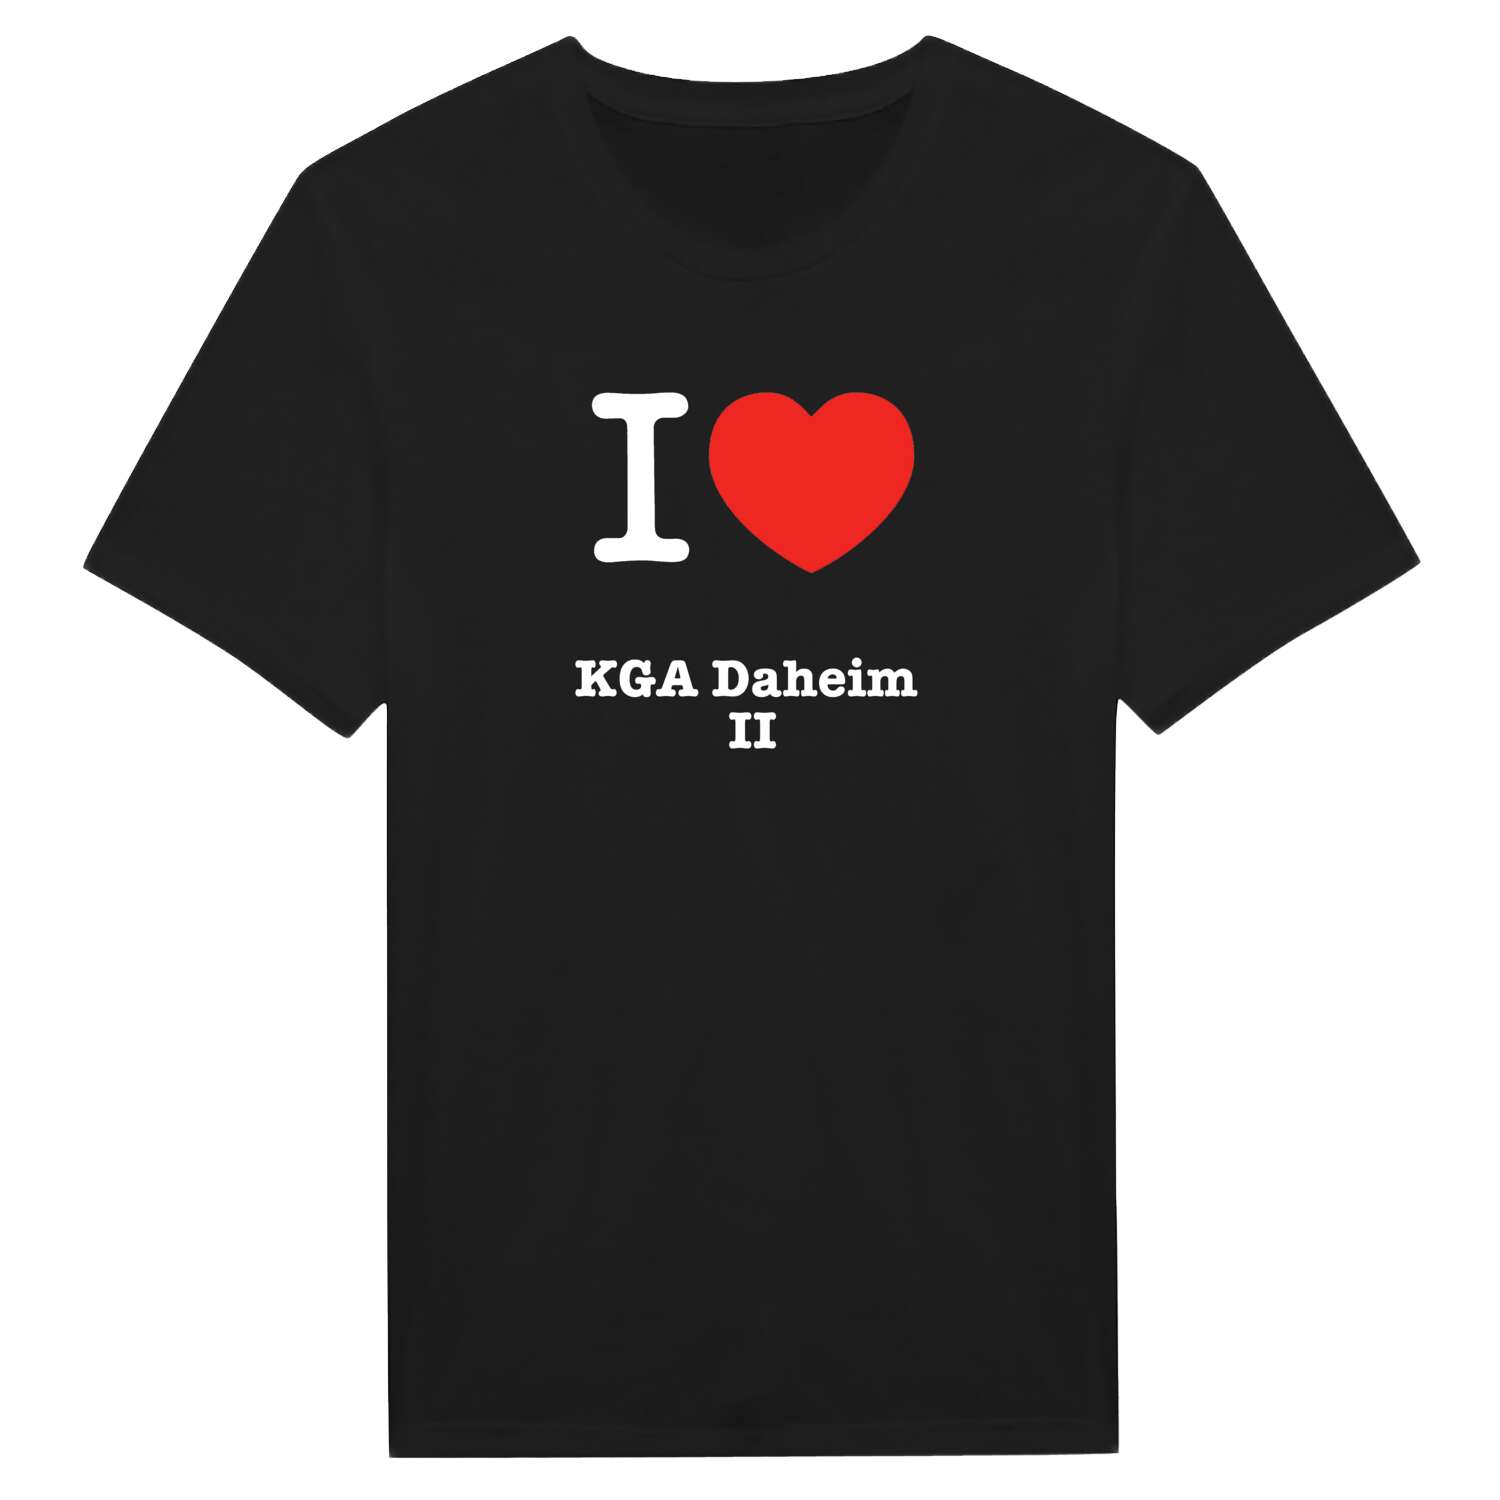 KGA Daheim II T-Shirt »I love«